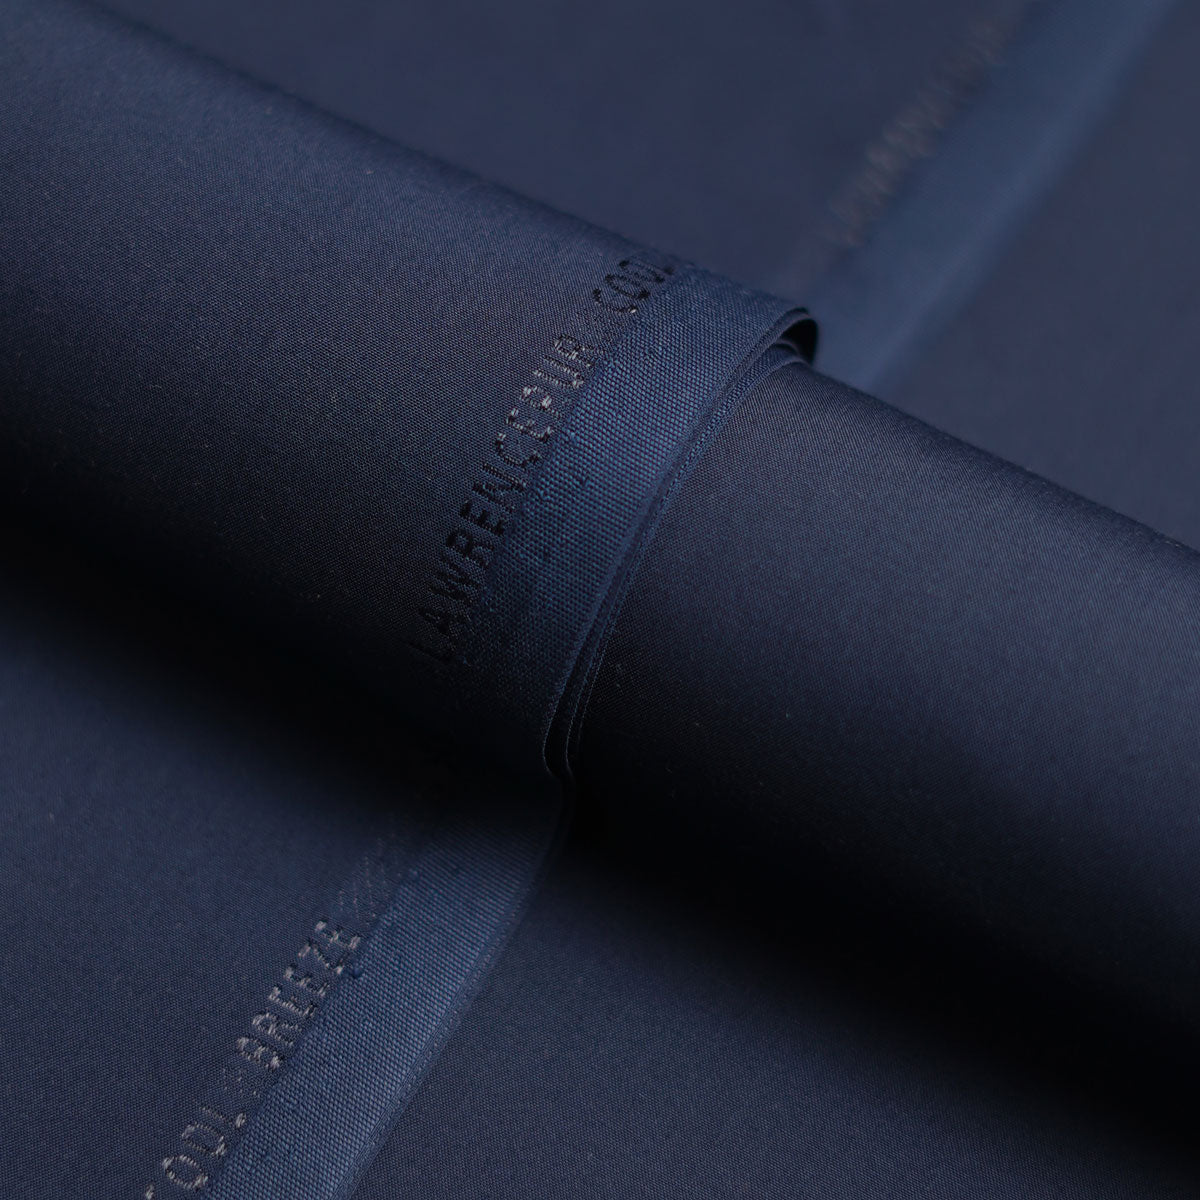 Plain Navy Blue, Cool Breeze Poly Viscose/Modal Viscose Shalwar Kameez Fabric